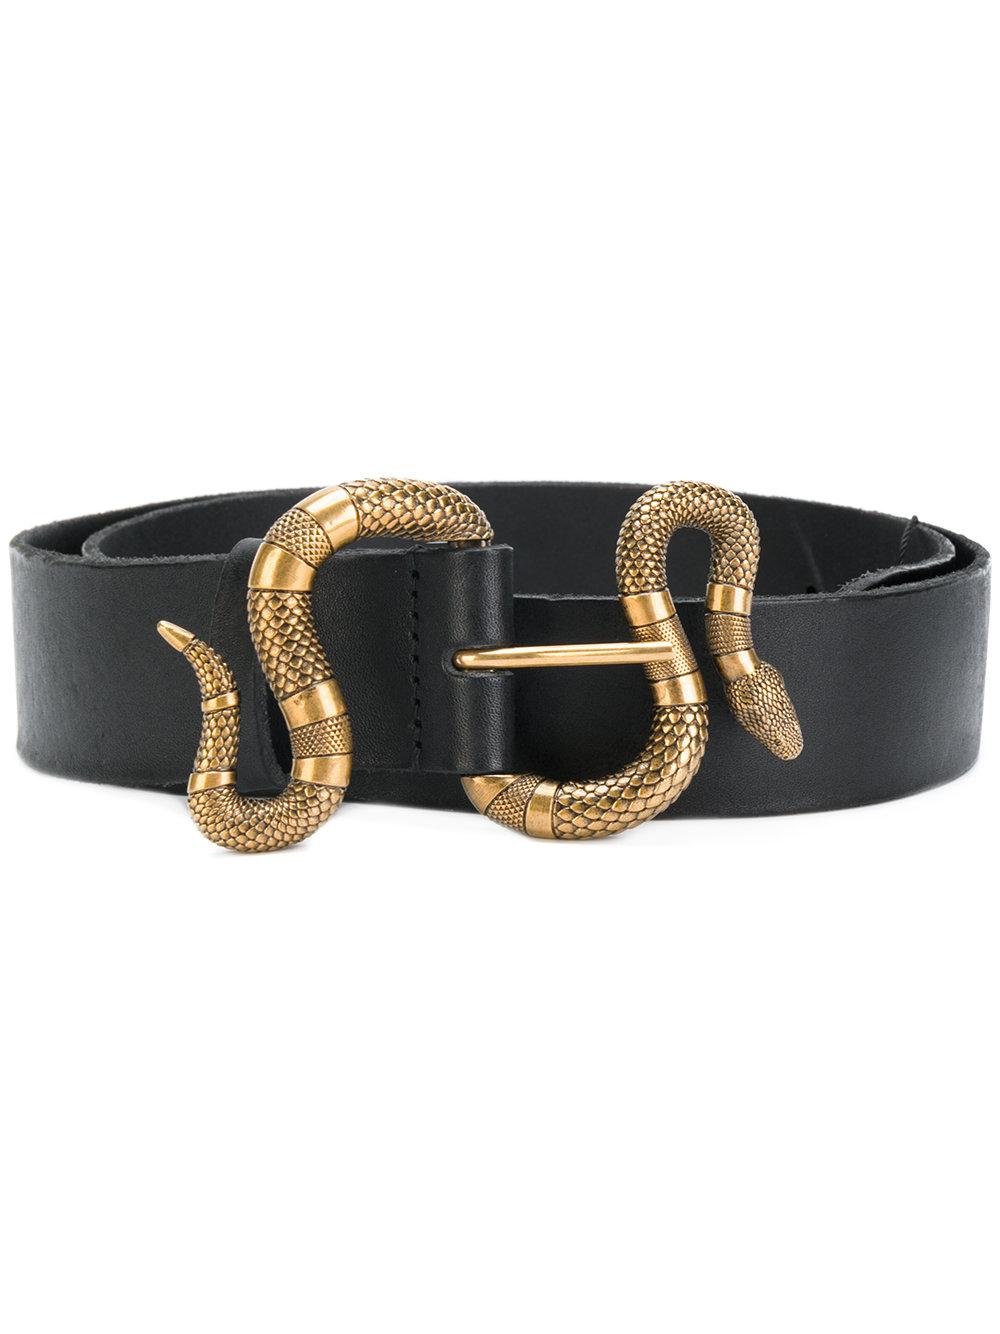 Gucci Leather Snake Buckle Belt in Black for Men - Lyst